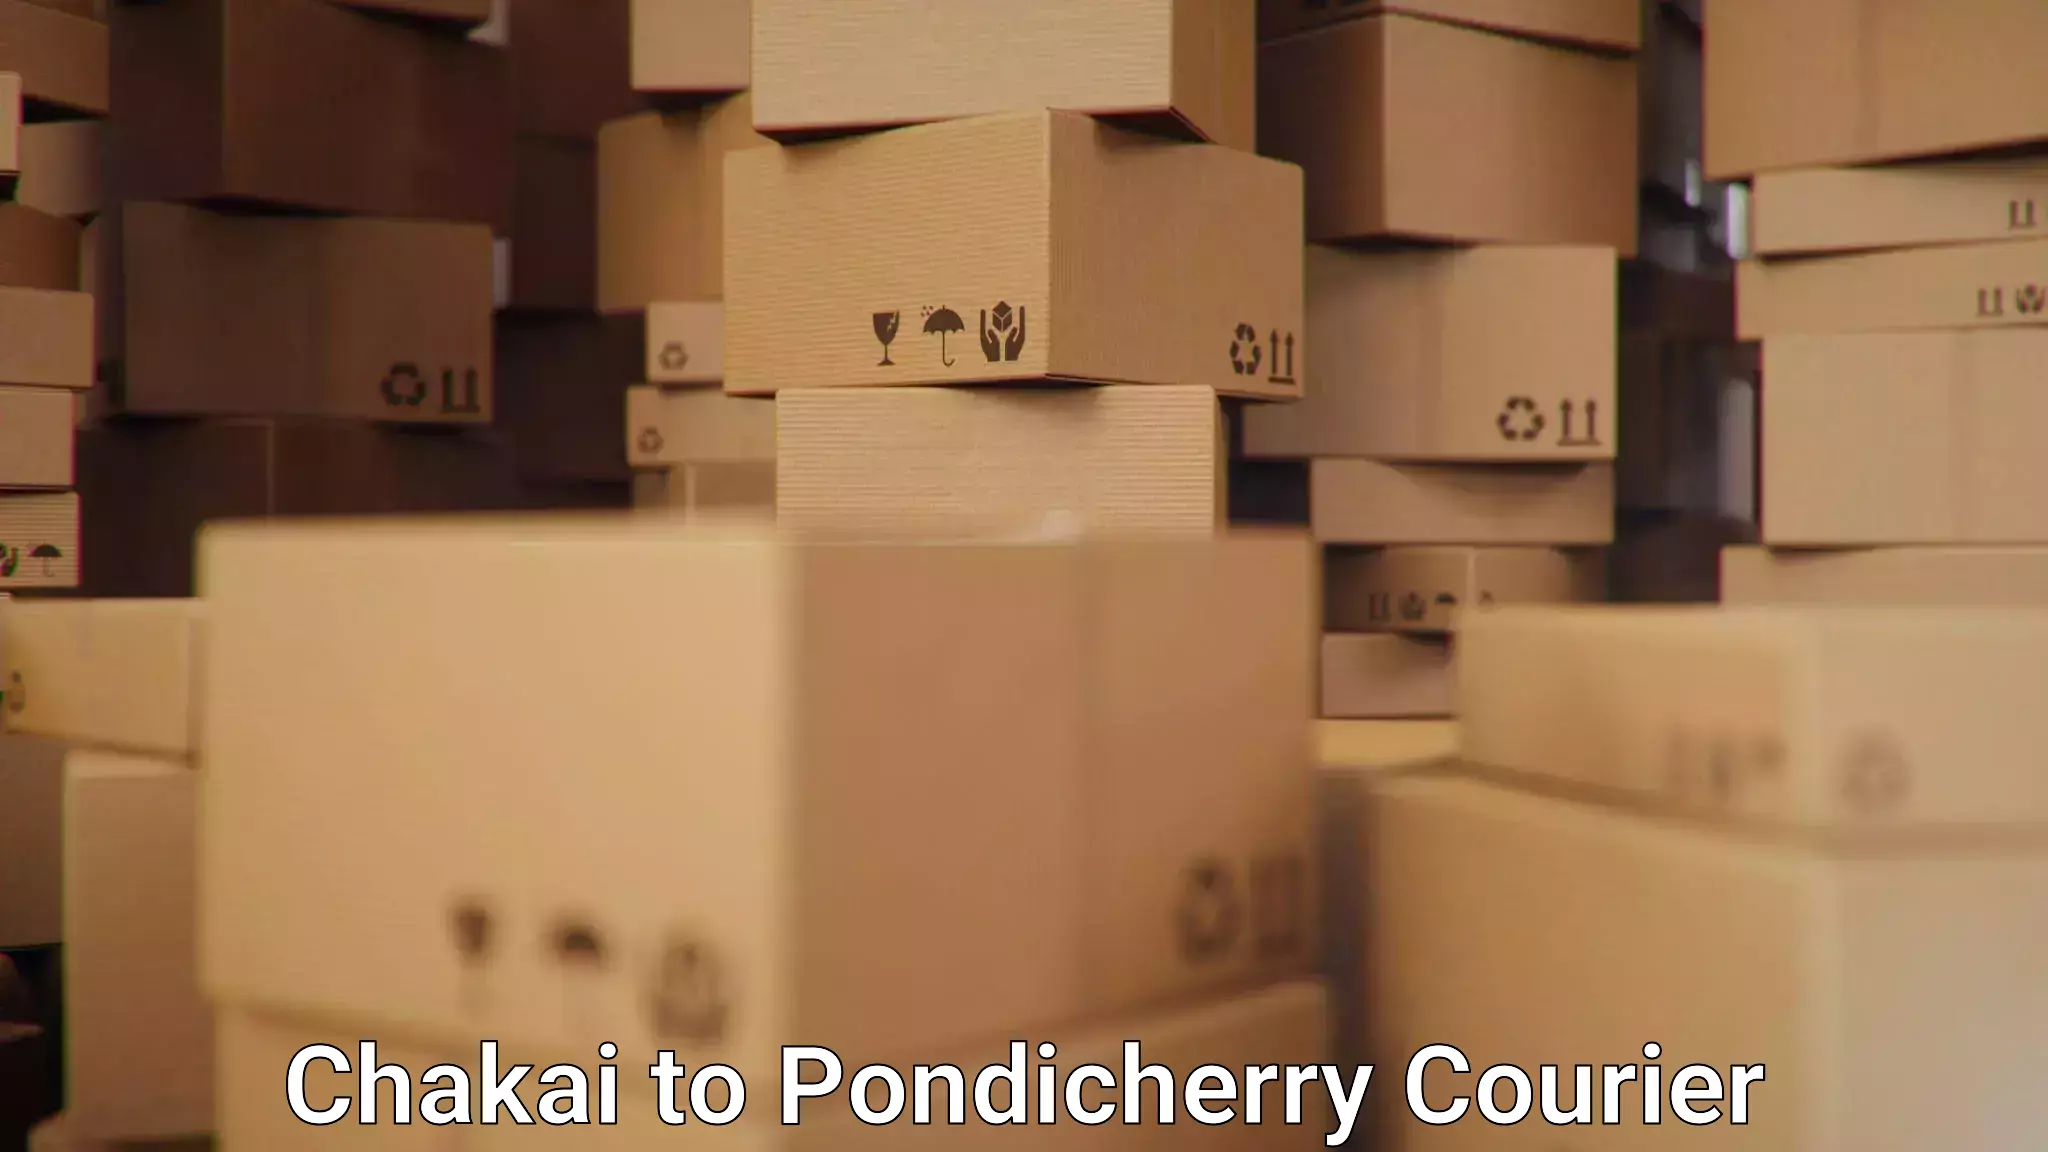 User-friendly delivery service Chakai to Pondicherry